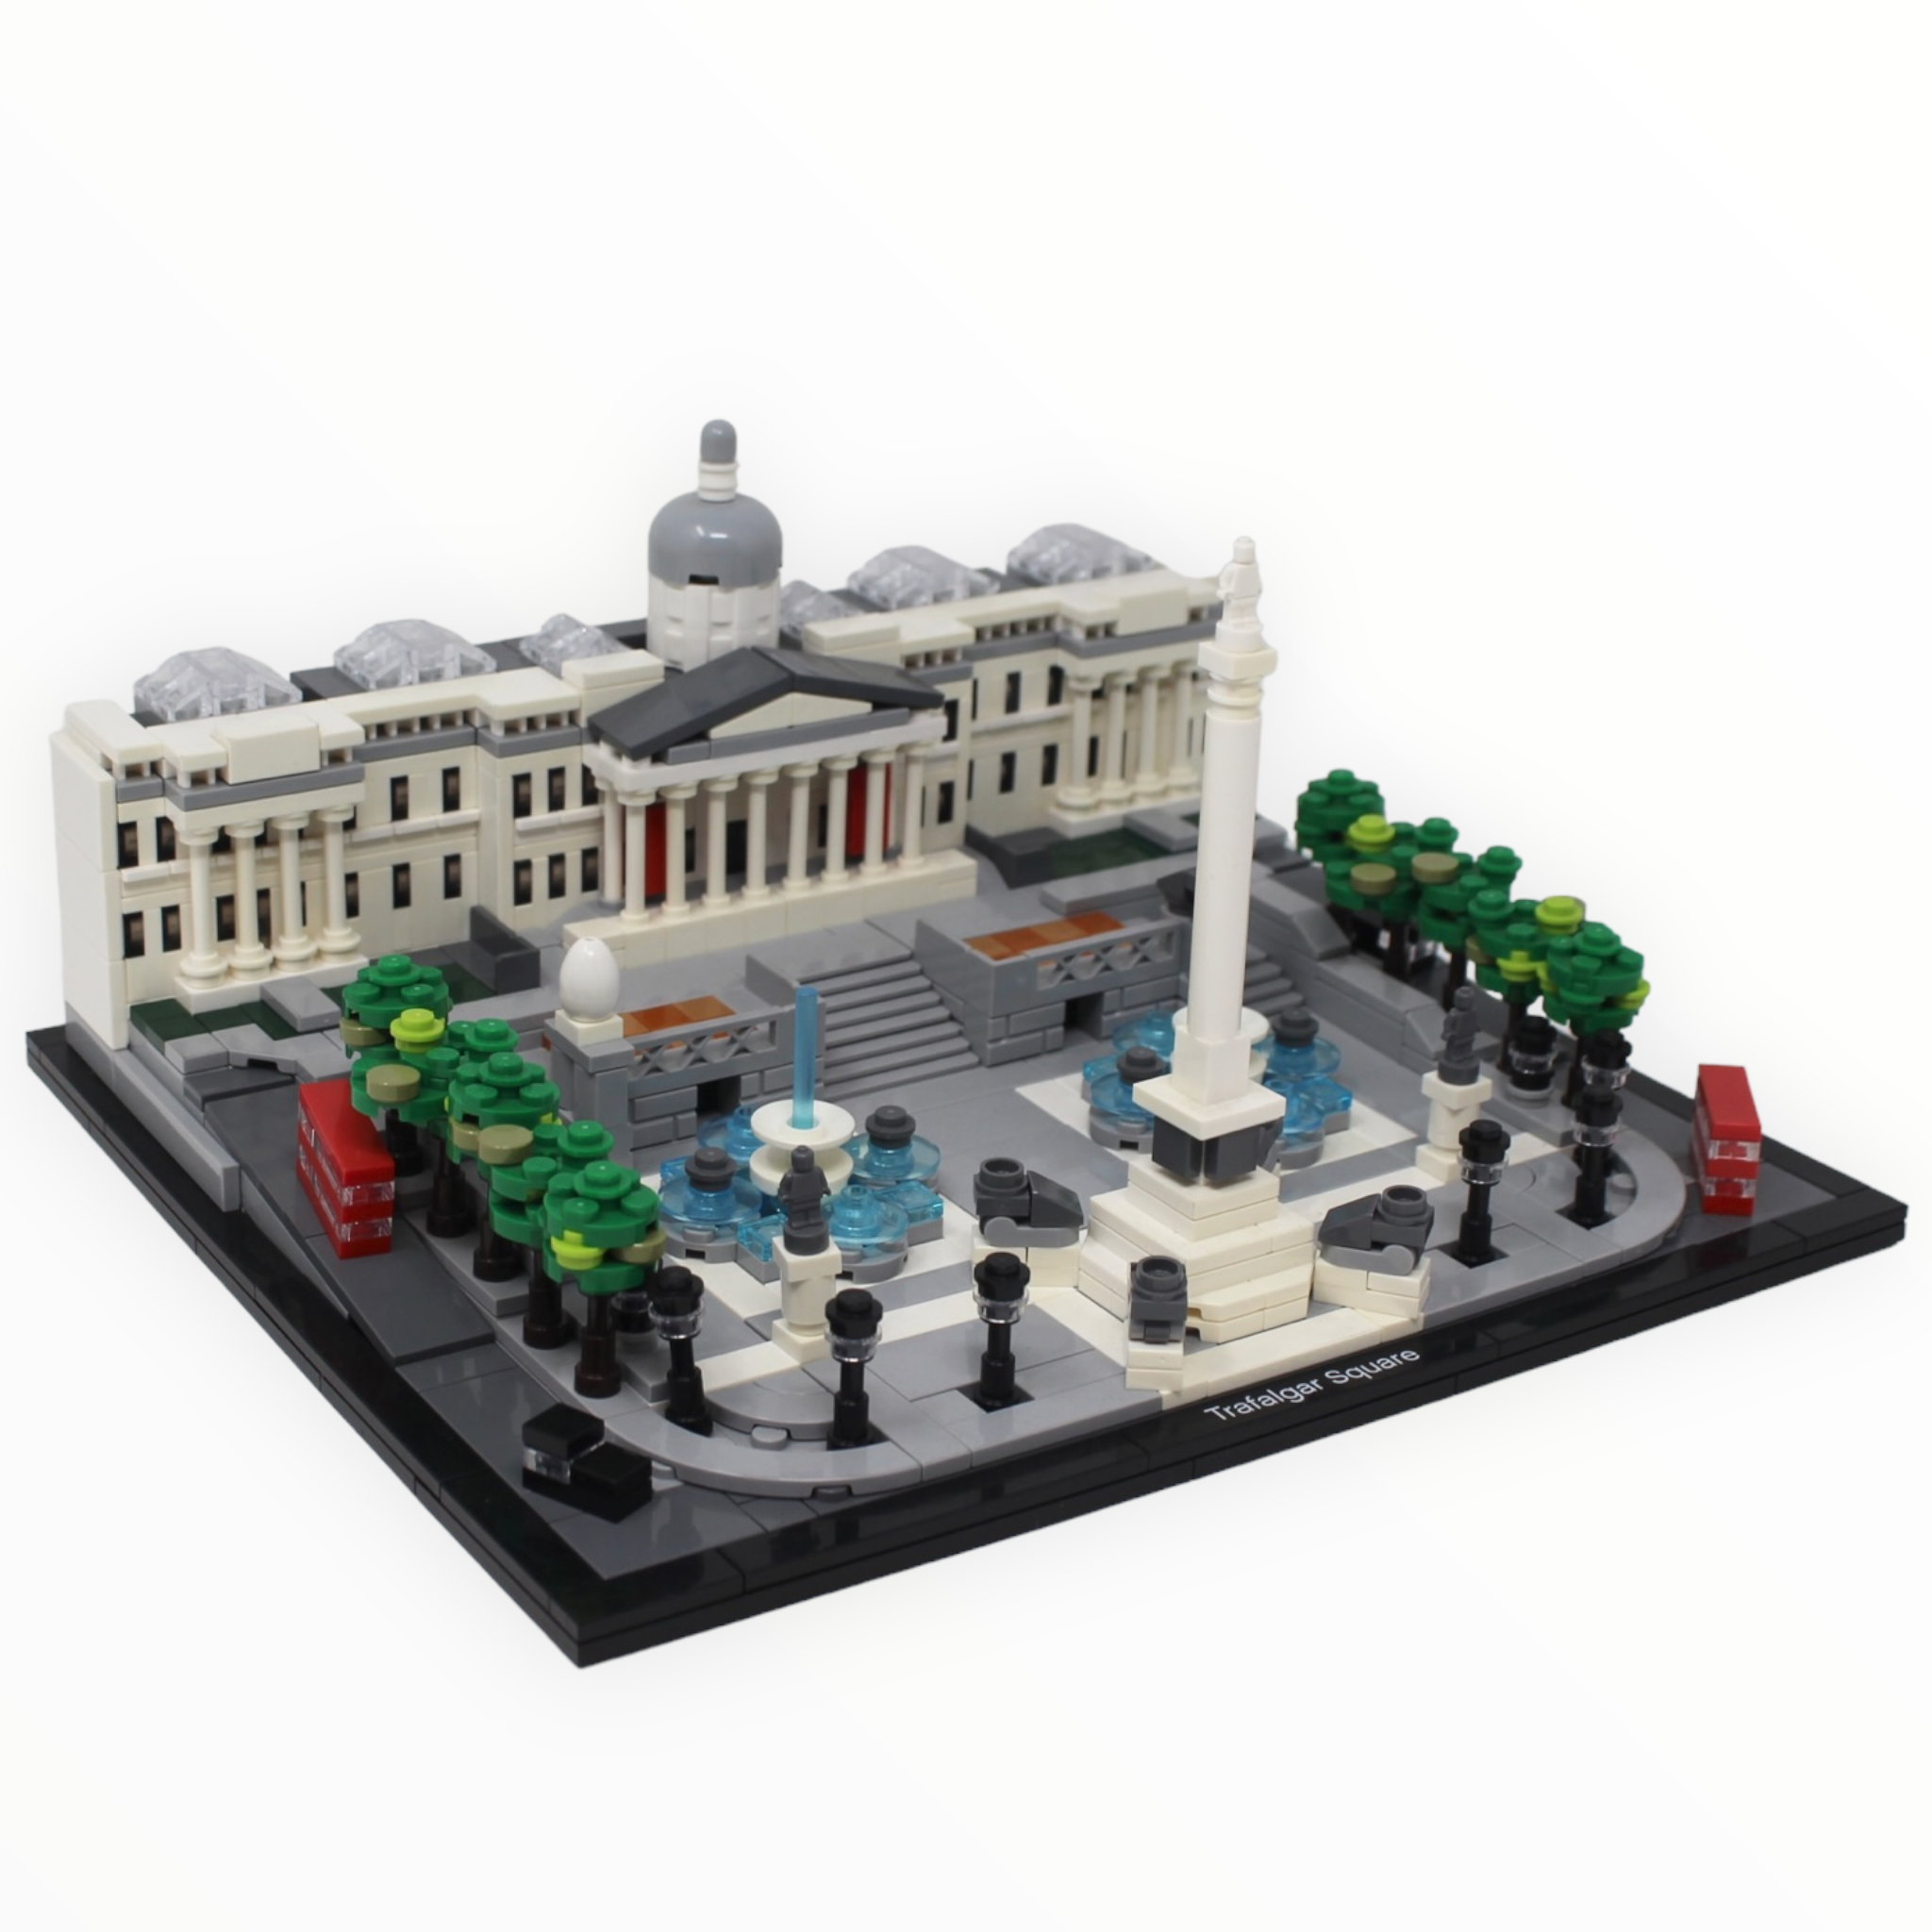 Trafalgar Square 21045, Architecture